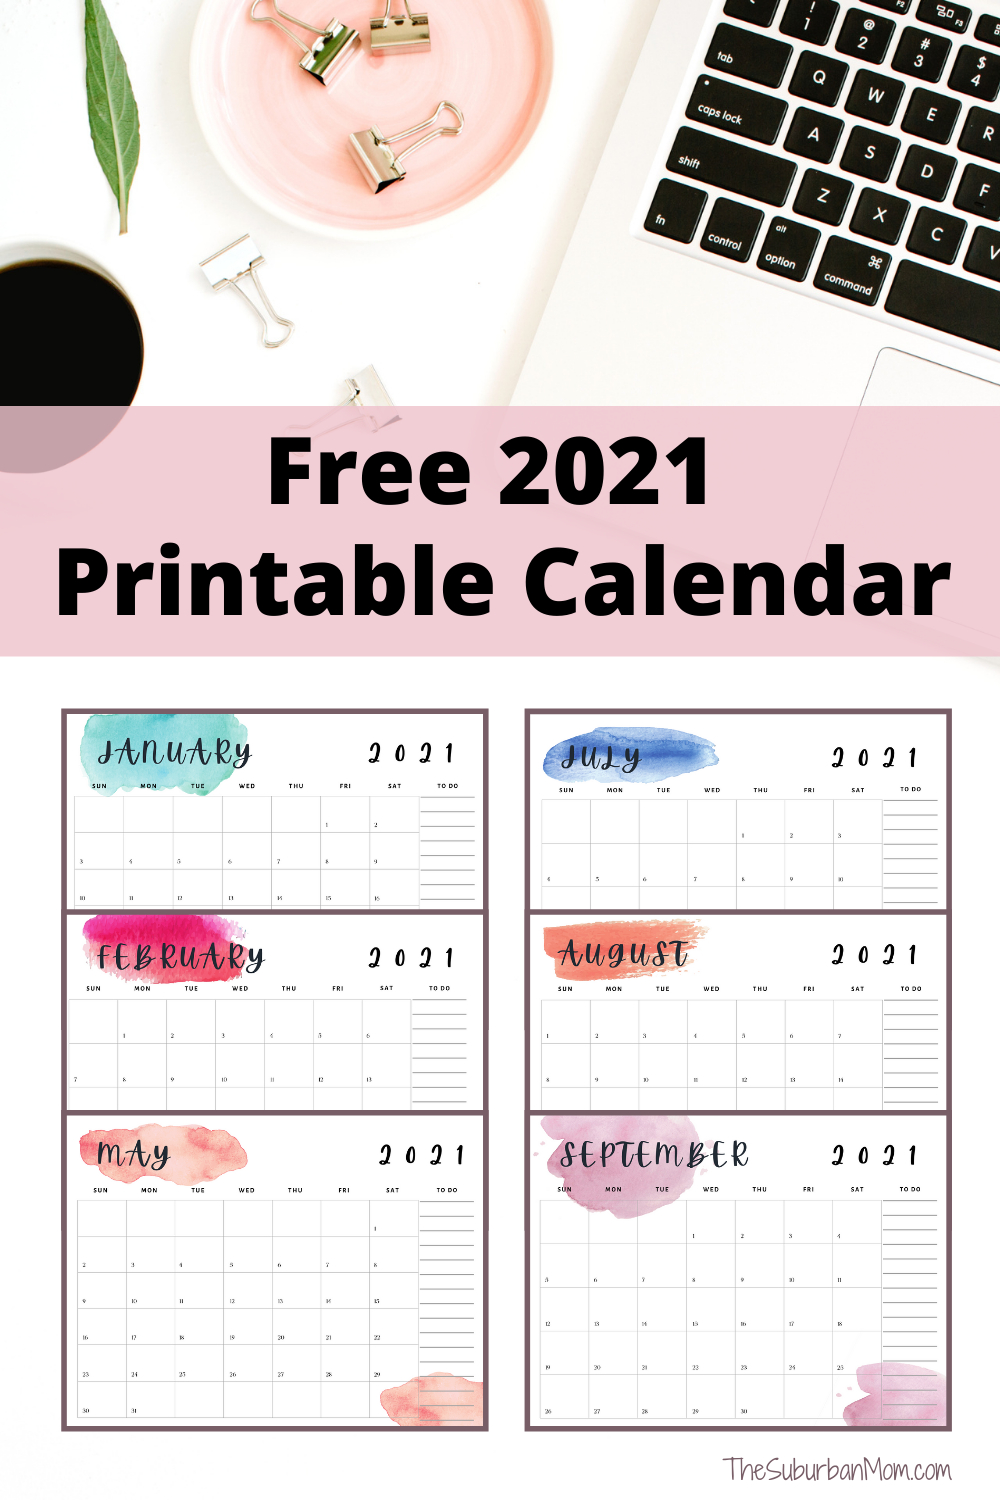 2021 Free Printable Calendar - The Suburban Mom-2021 Monthly Calendar Printable Free